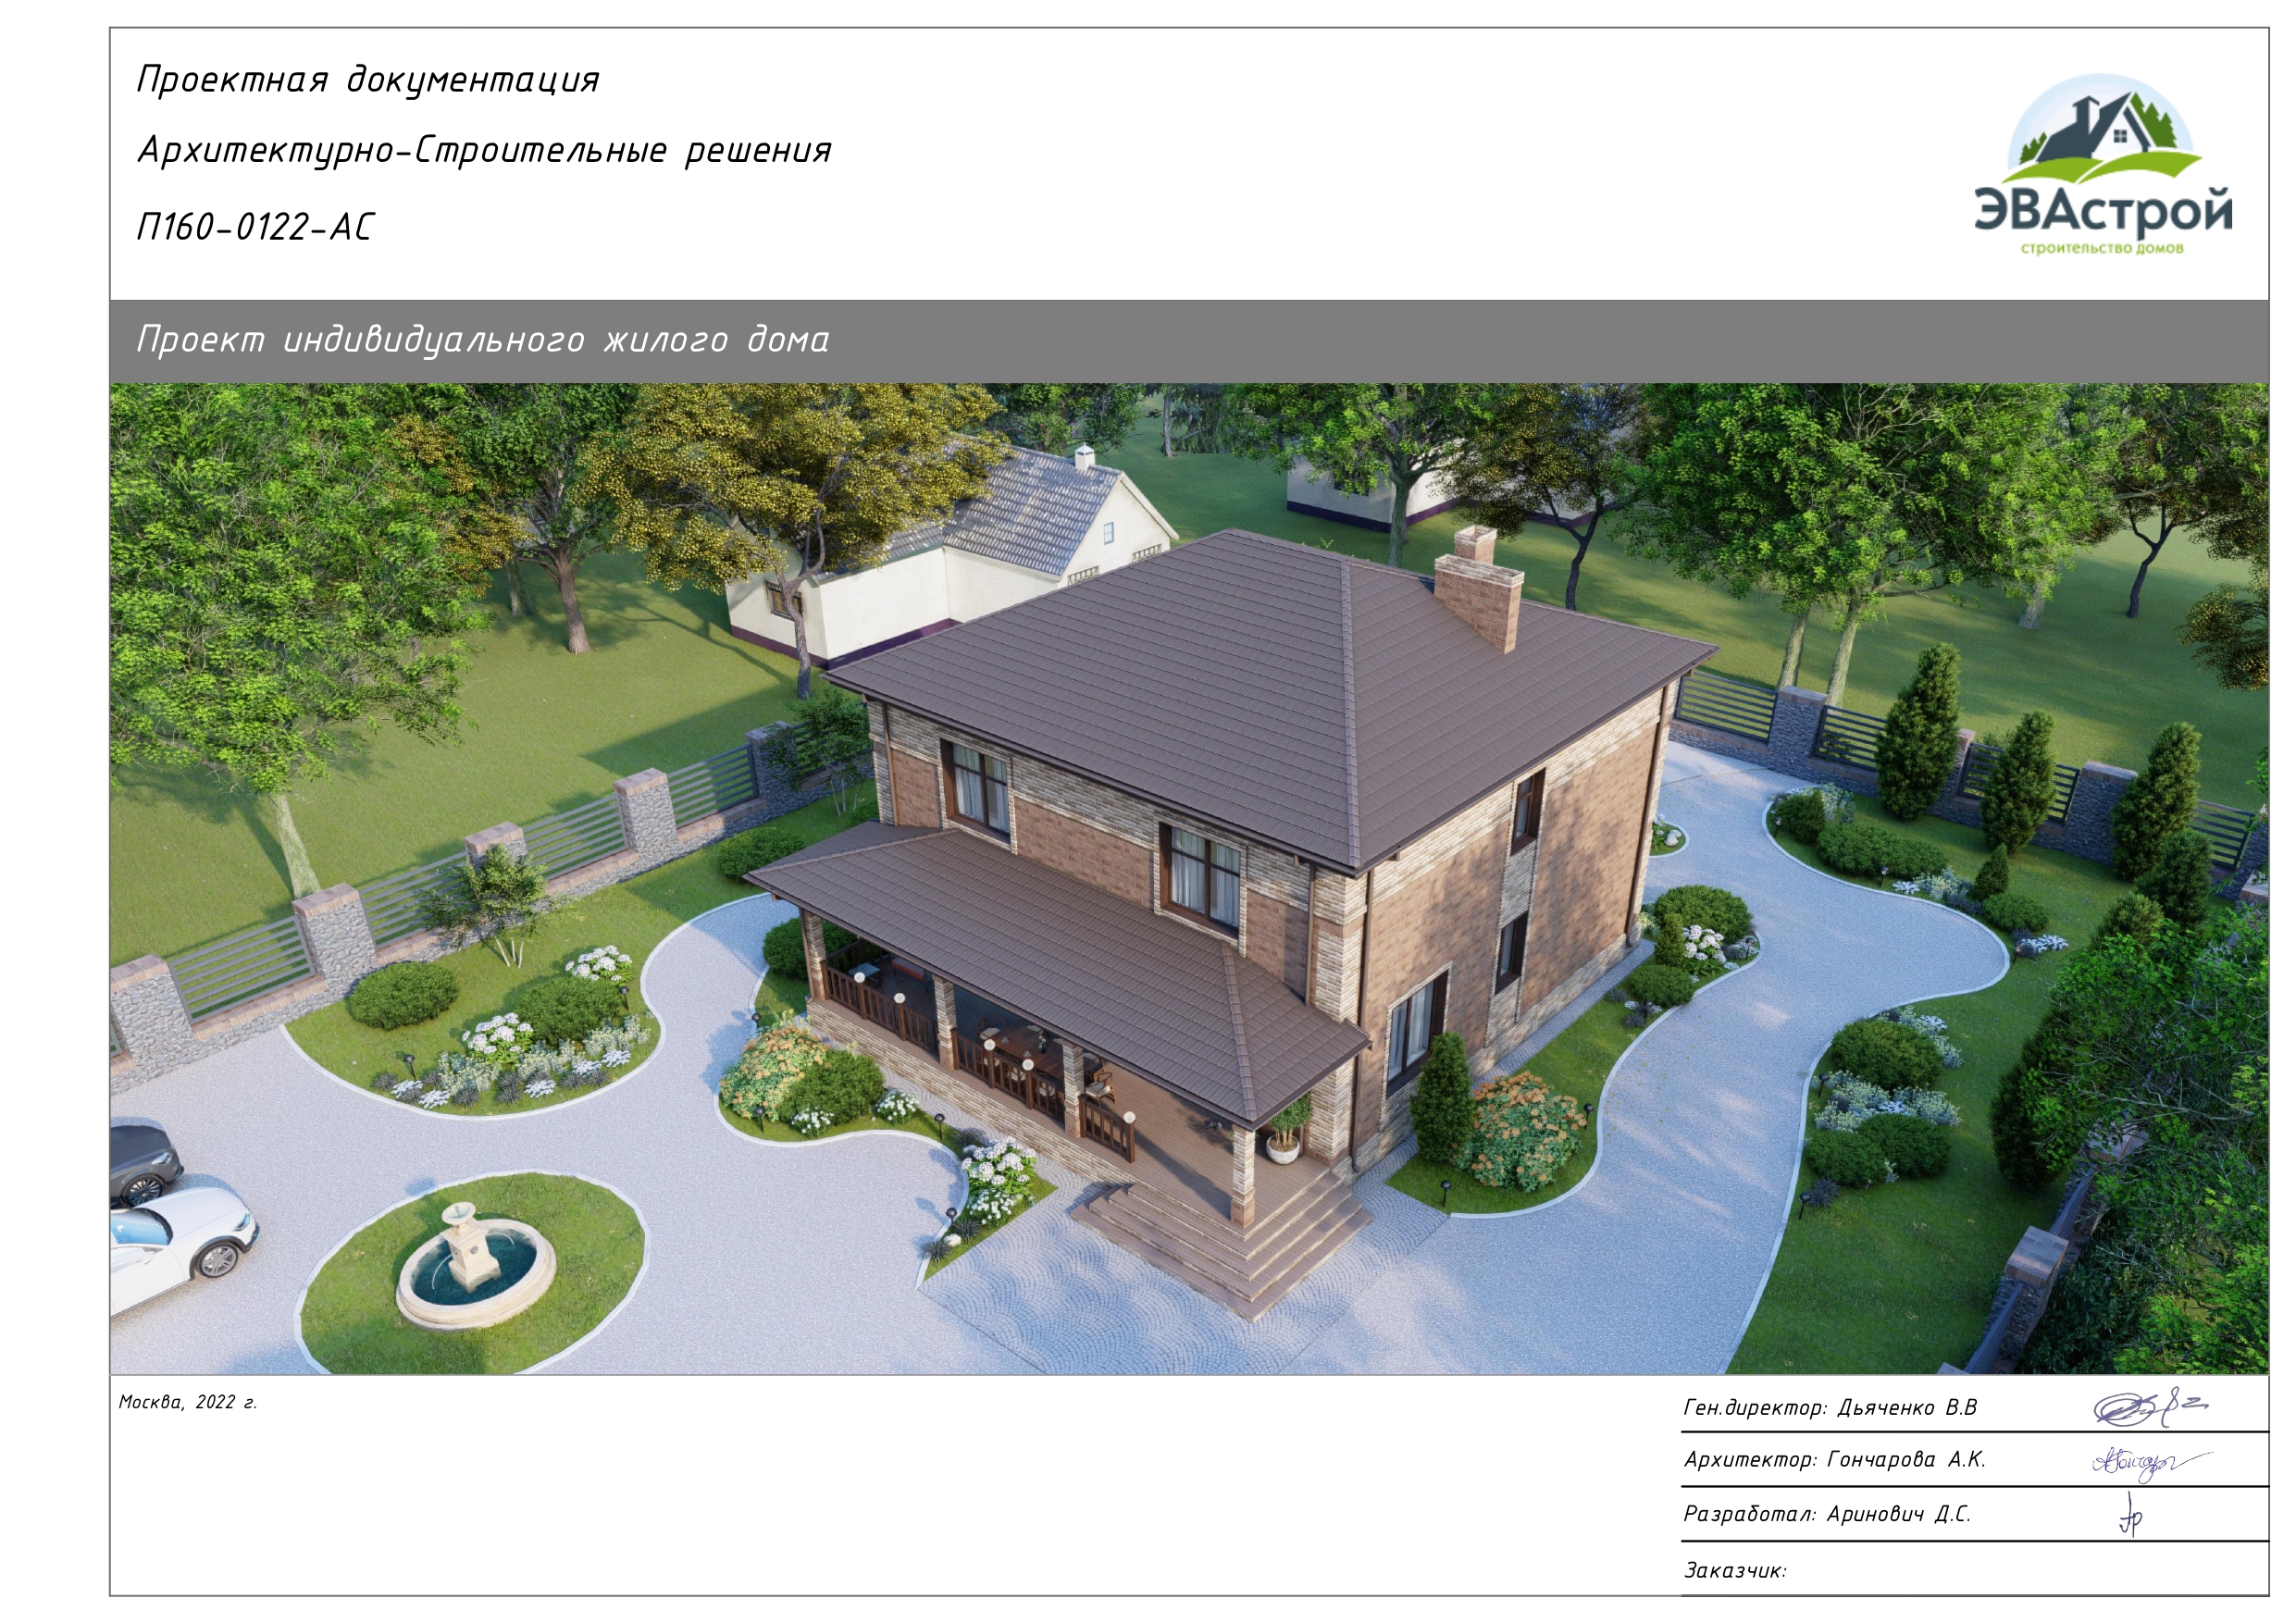 Дизайн-проект жилого дома, разработка и реализация